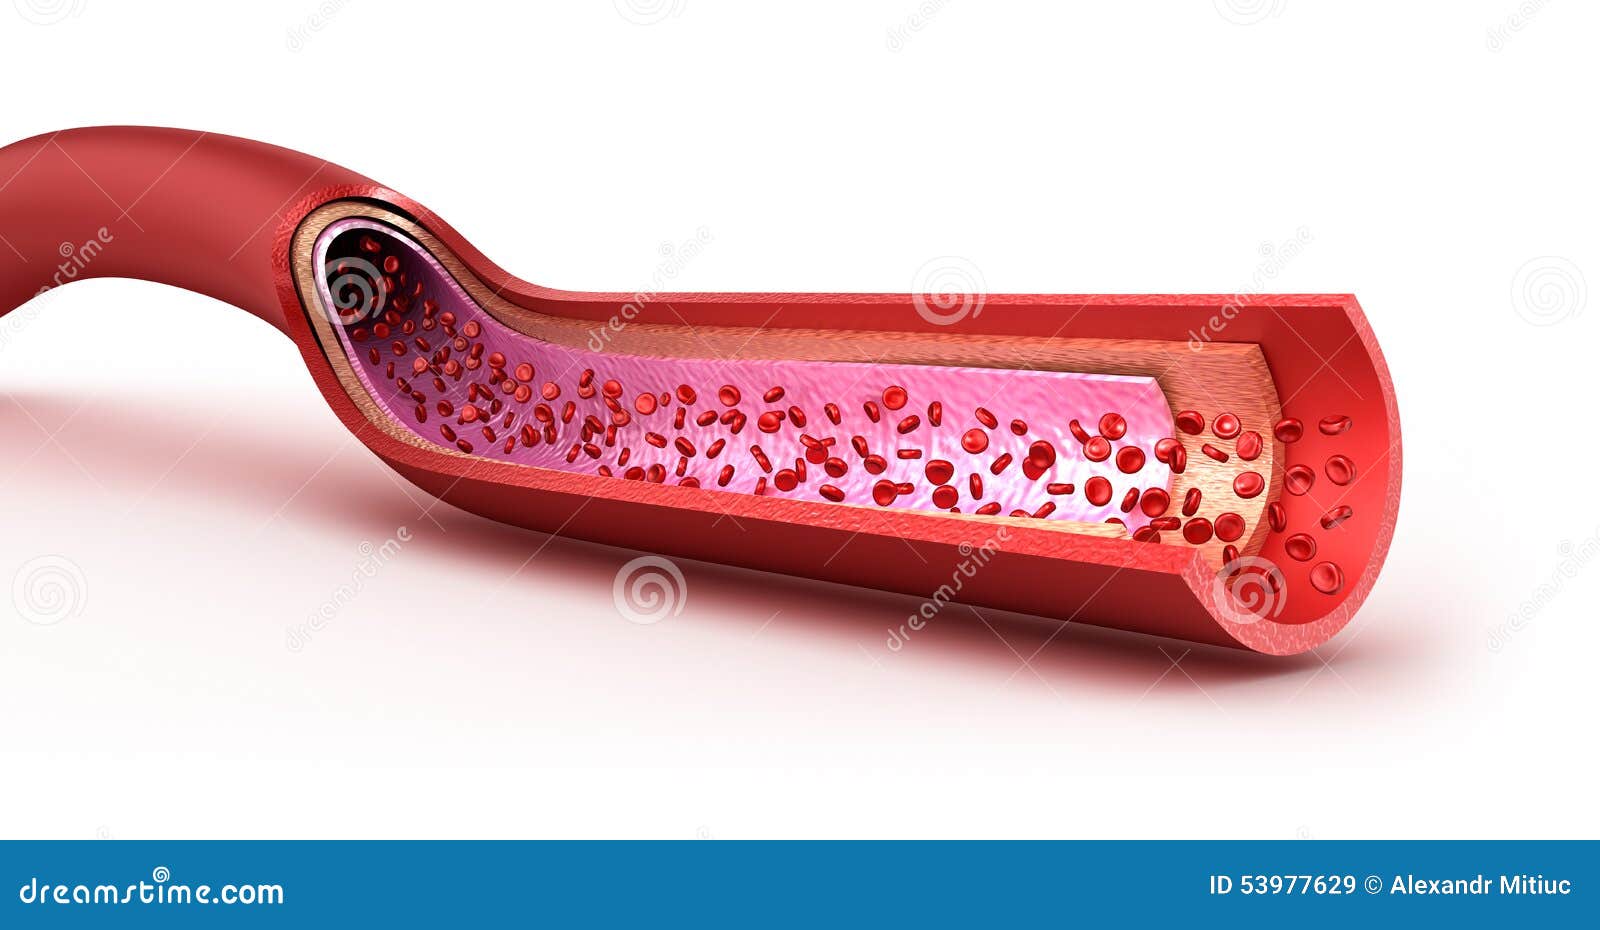 blood vessel sliced macro with erythrocytes.